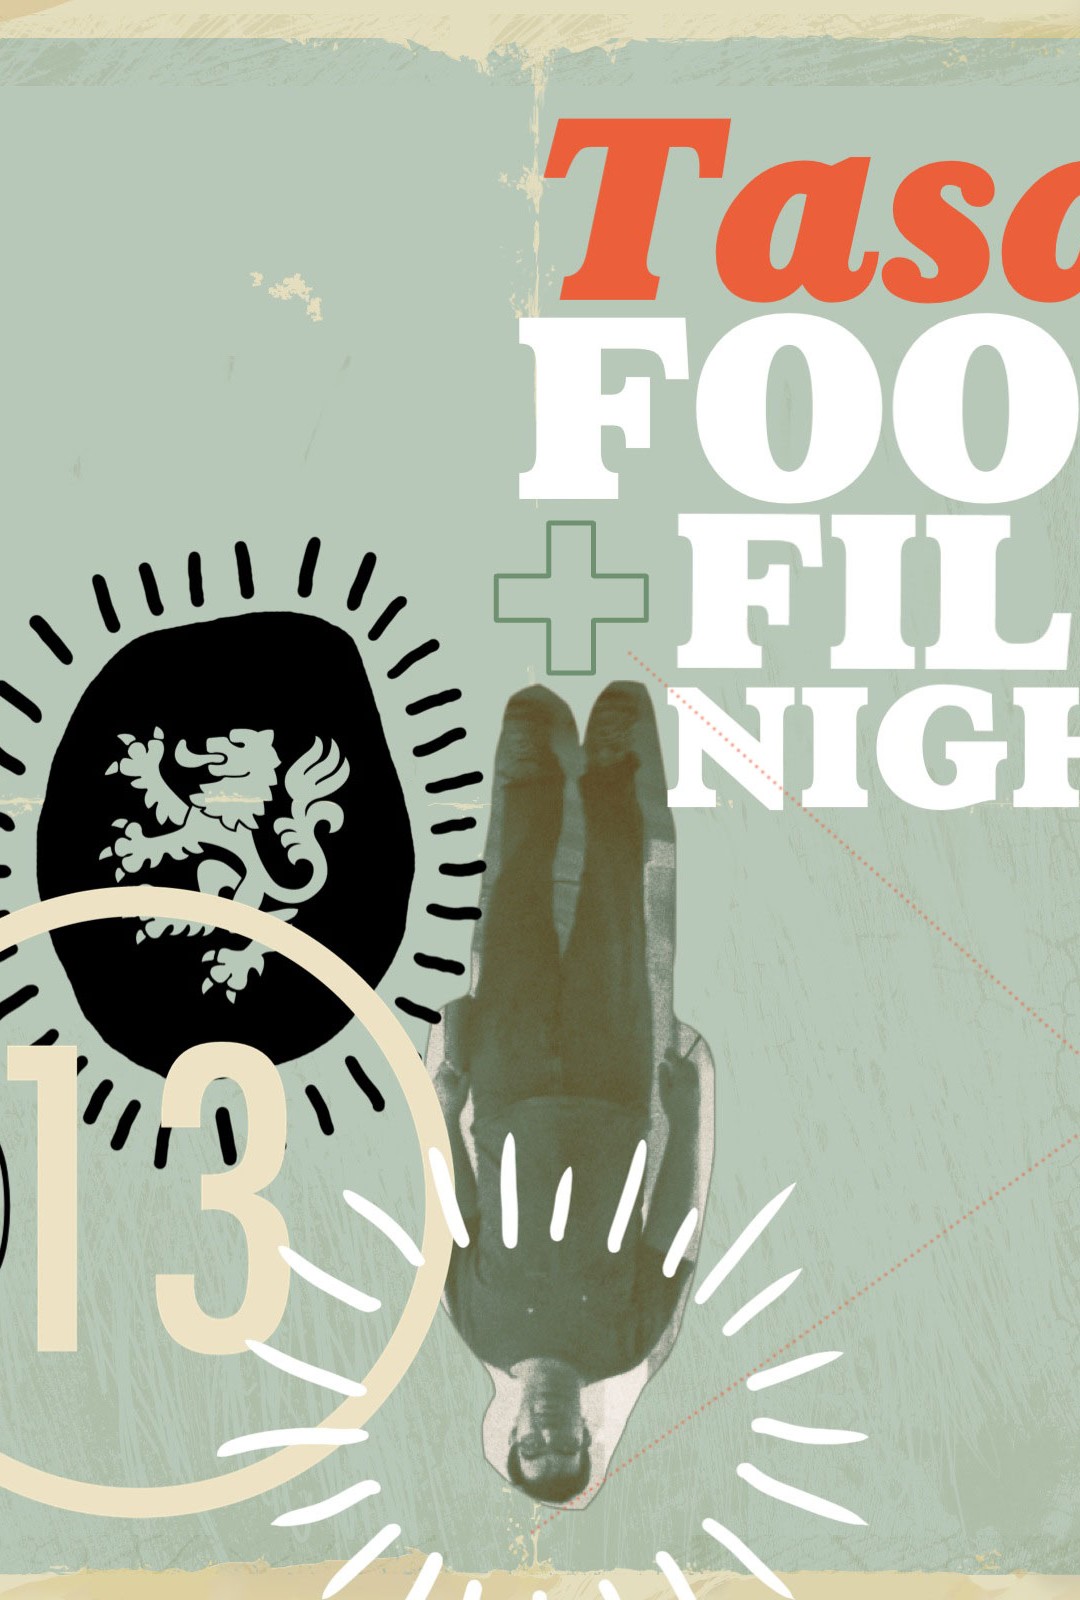 Food + Film Night